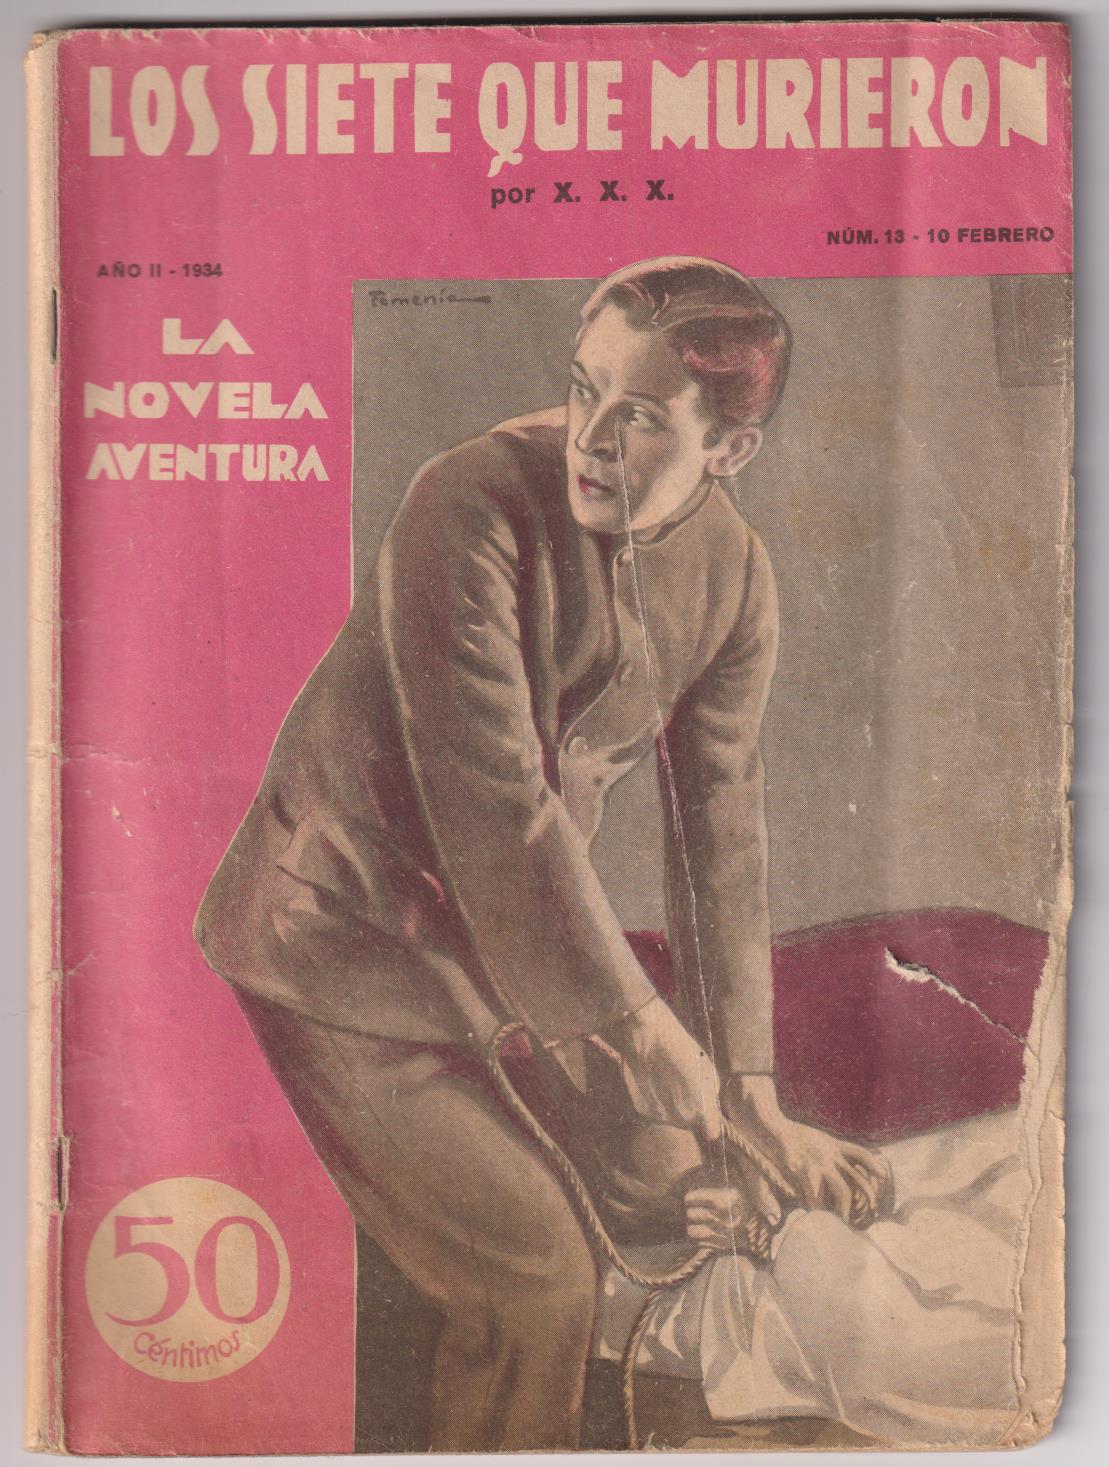 La Novela Aventura nº 13. Los siete que murieron por X.X.X. Hymsa 1934